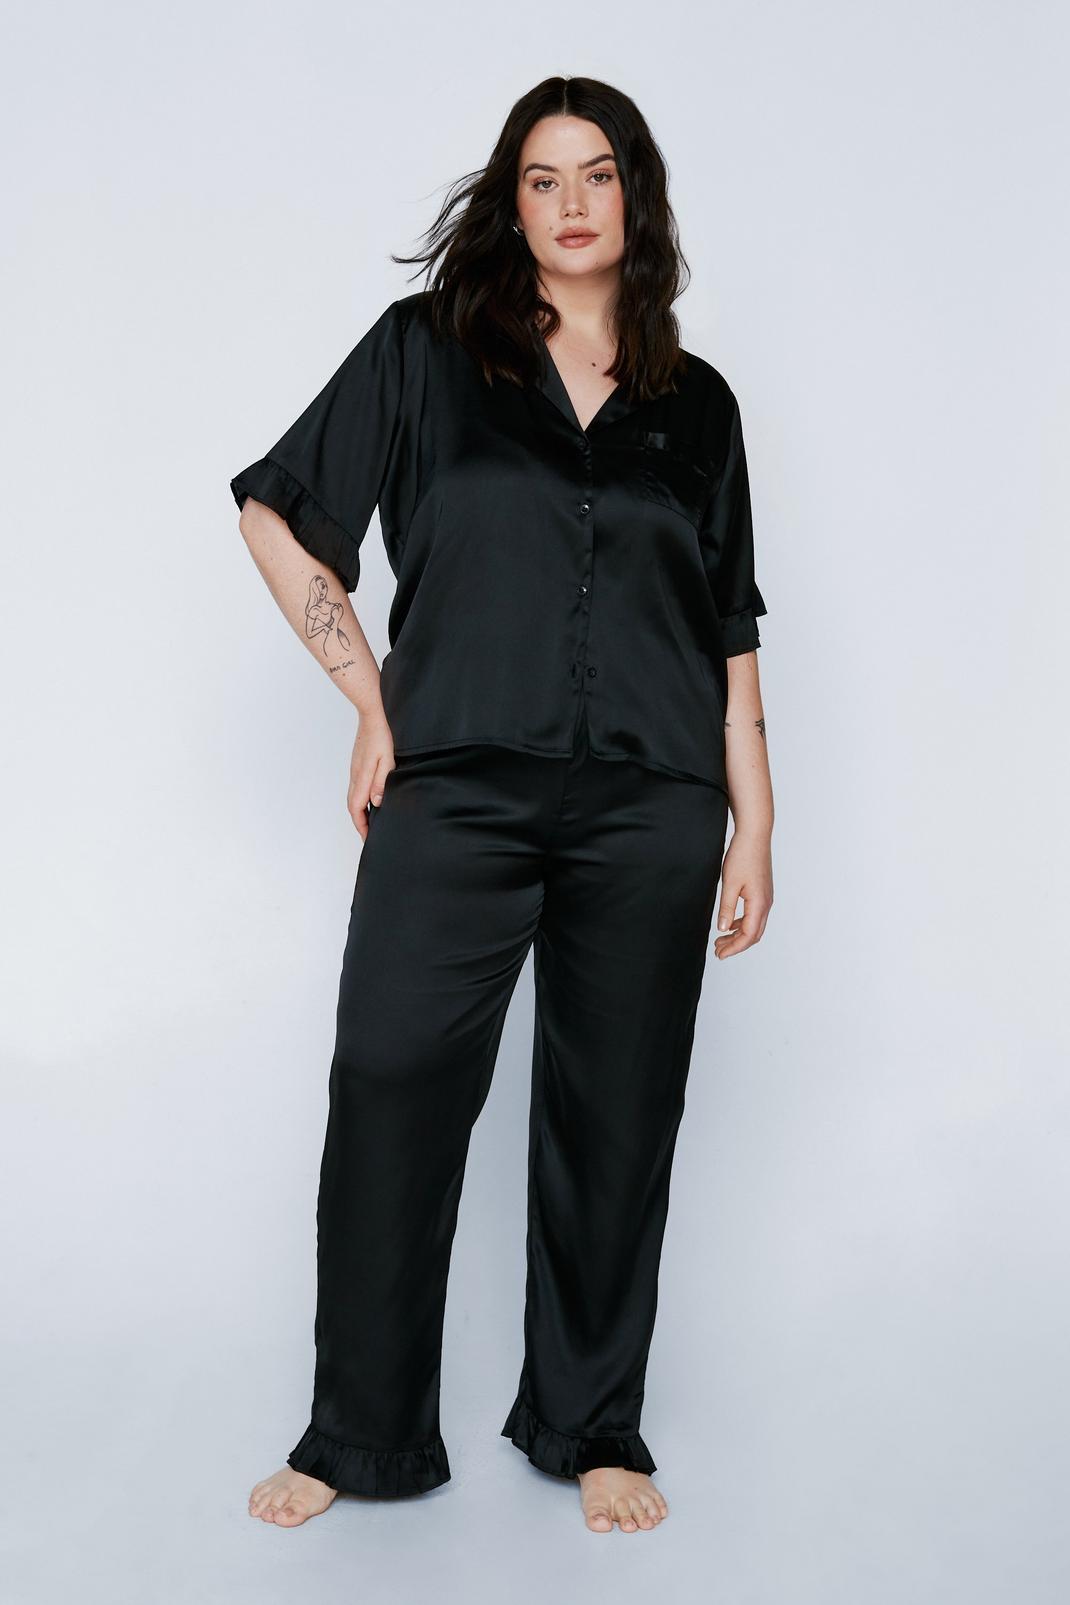 Black Plus Size Satin Ruffle Pants Pajama Set image number 1